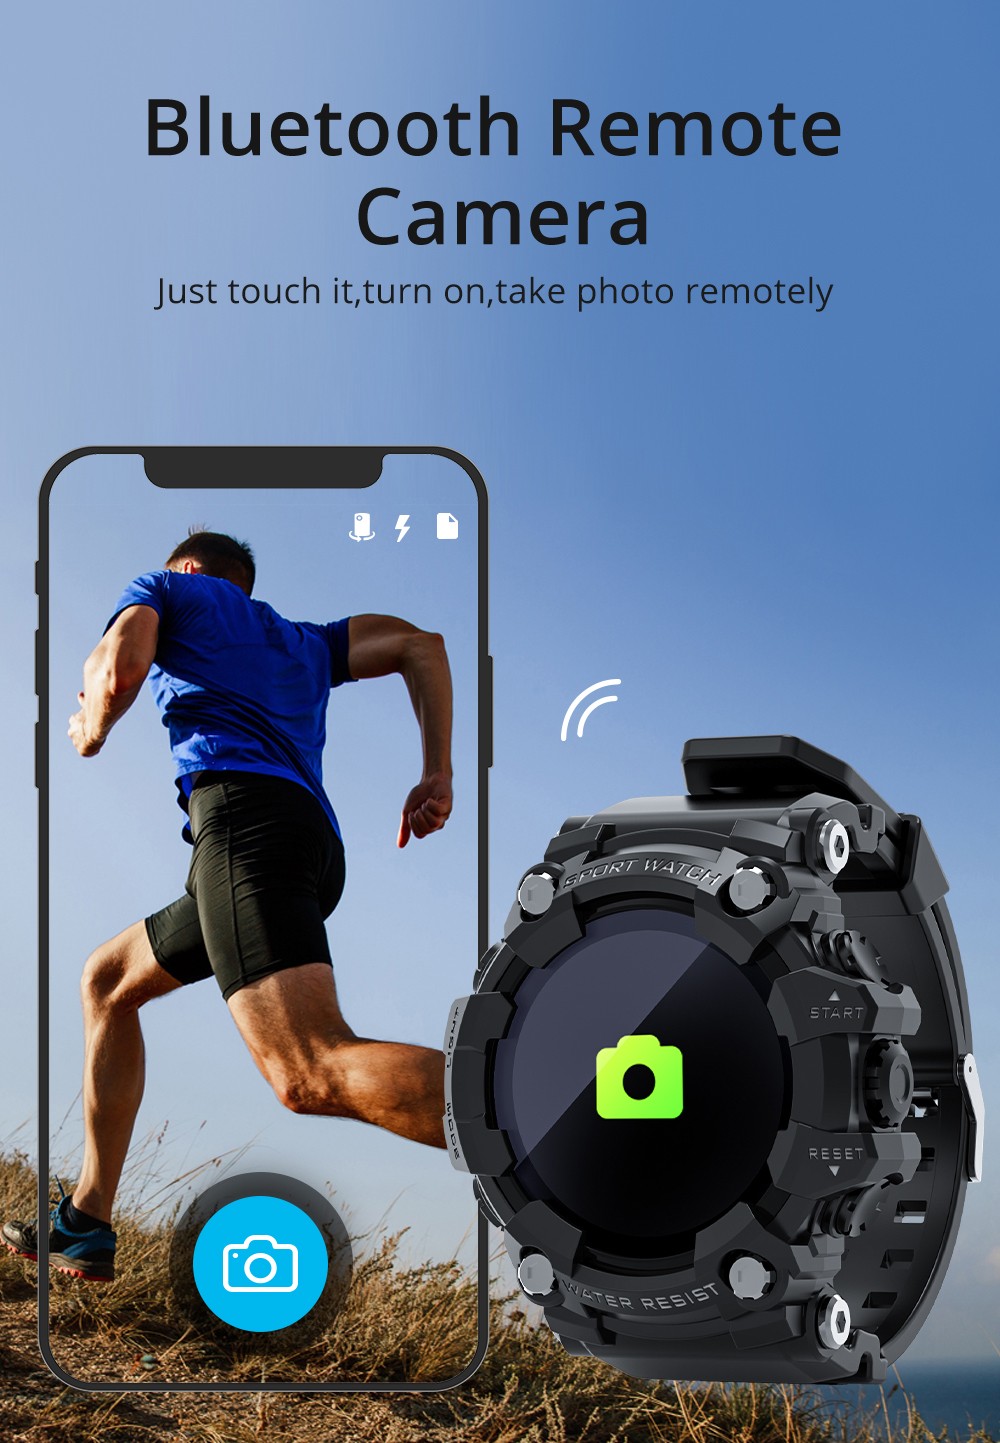 LOKMAT ATTACK Bluetooth Smartwatch 1.28 inch TFT Touch Screen رصد معدل ضربات القلب وضغط الدم IP68 مقاومة للماء لمدة 25 يومًا وقت الانتظار - أسود